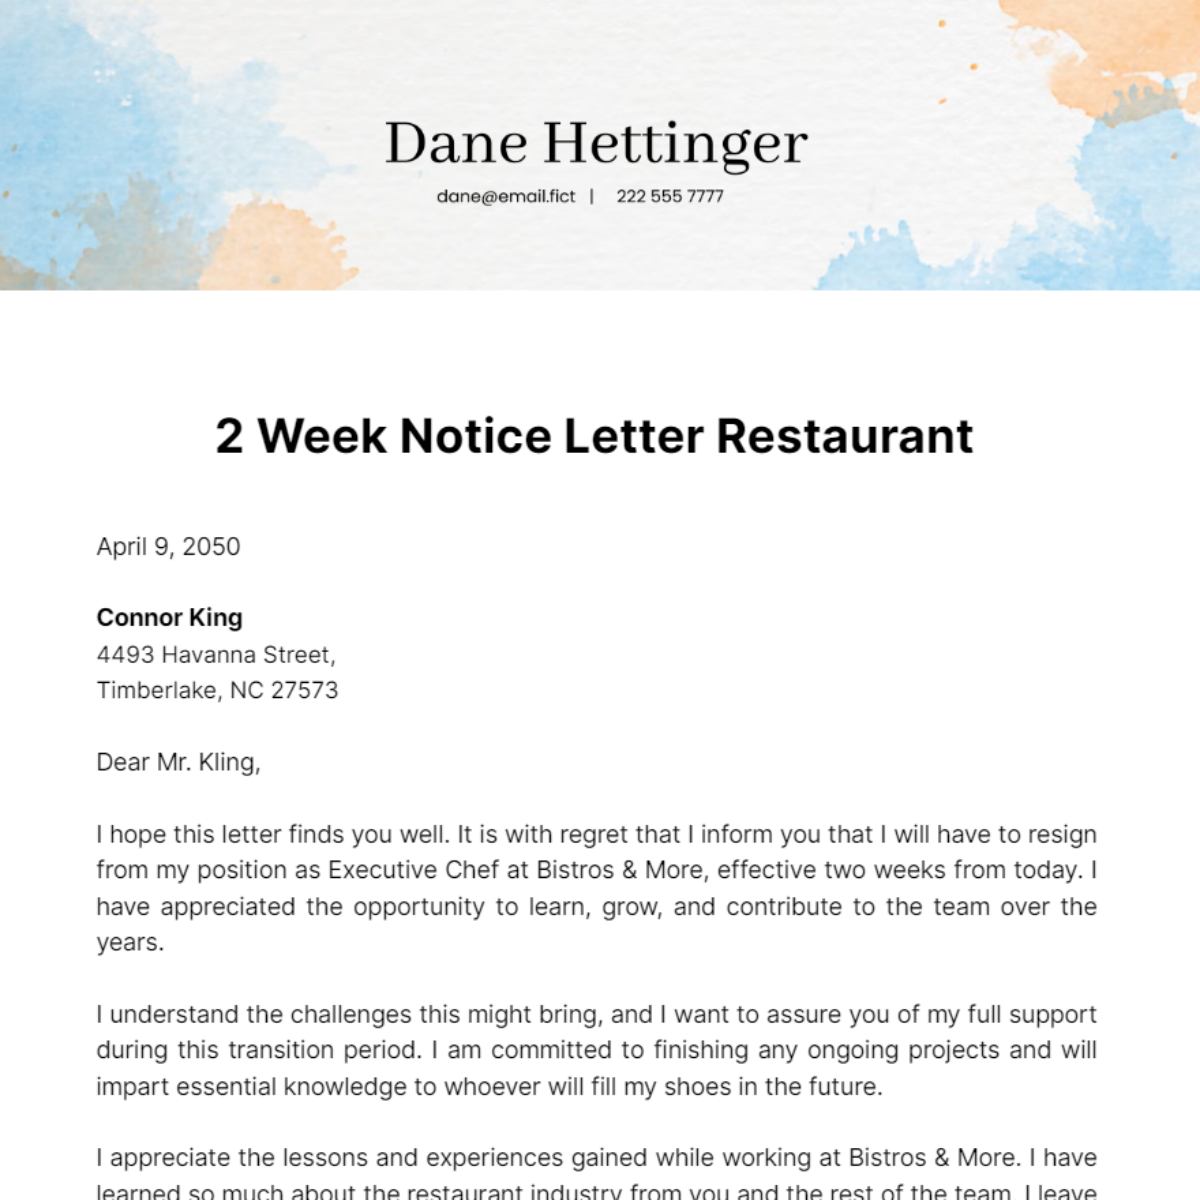 2 Week Notice Letter Restaurant Template